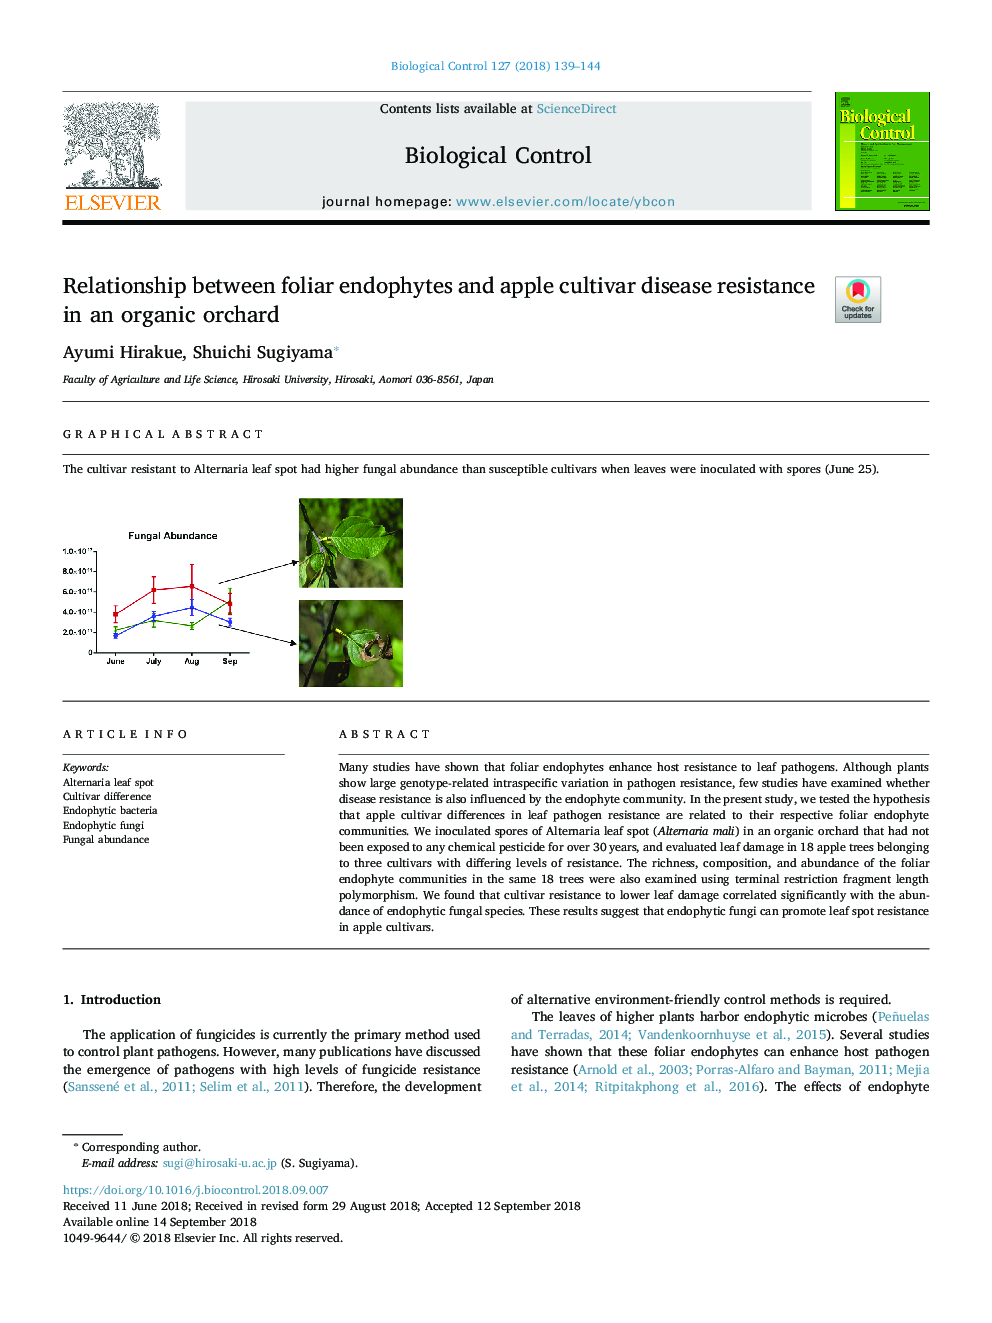 Relationship between foliar endophytes and apple cultivar disease resistance in an organic orchard